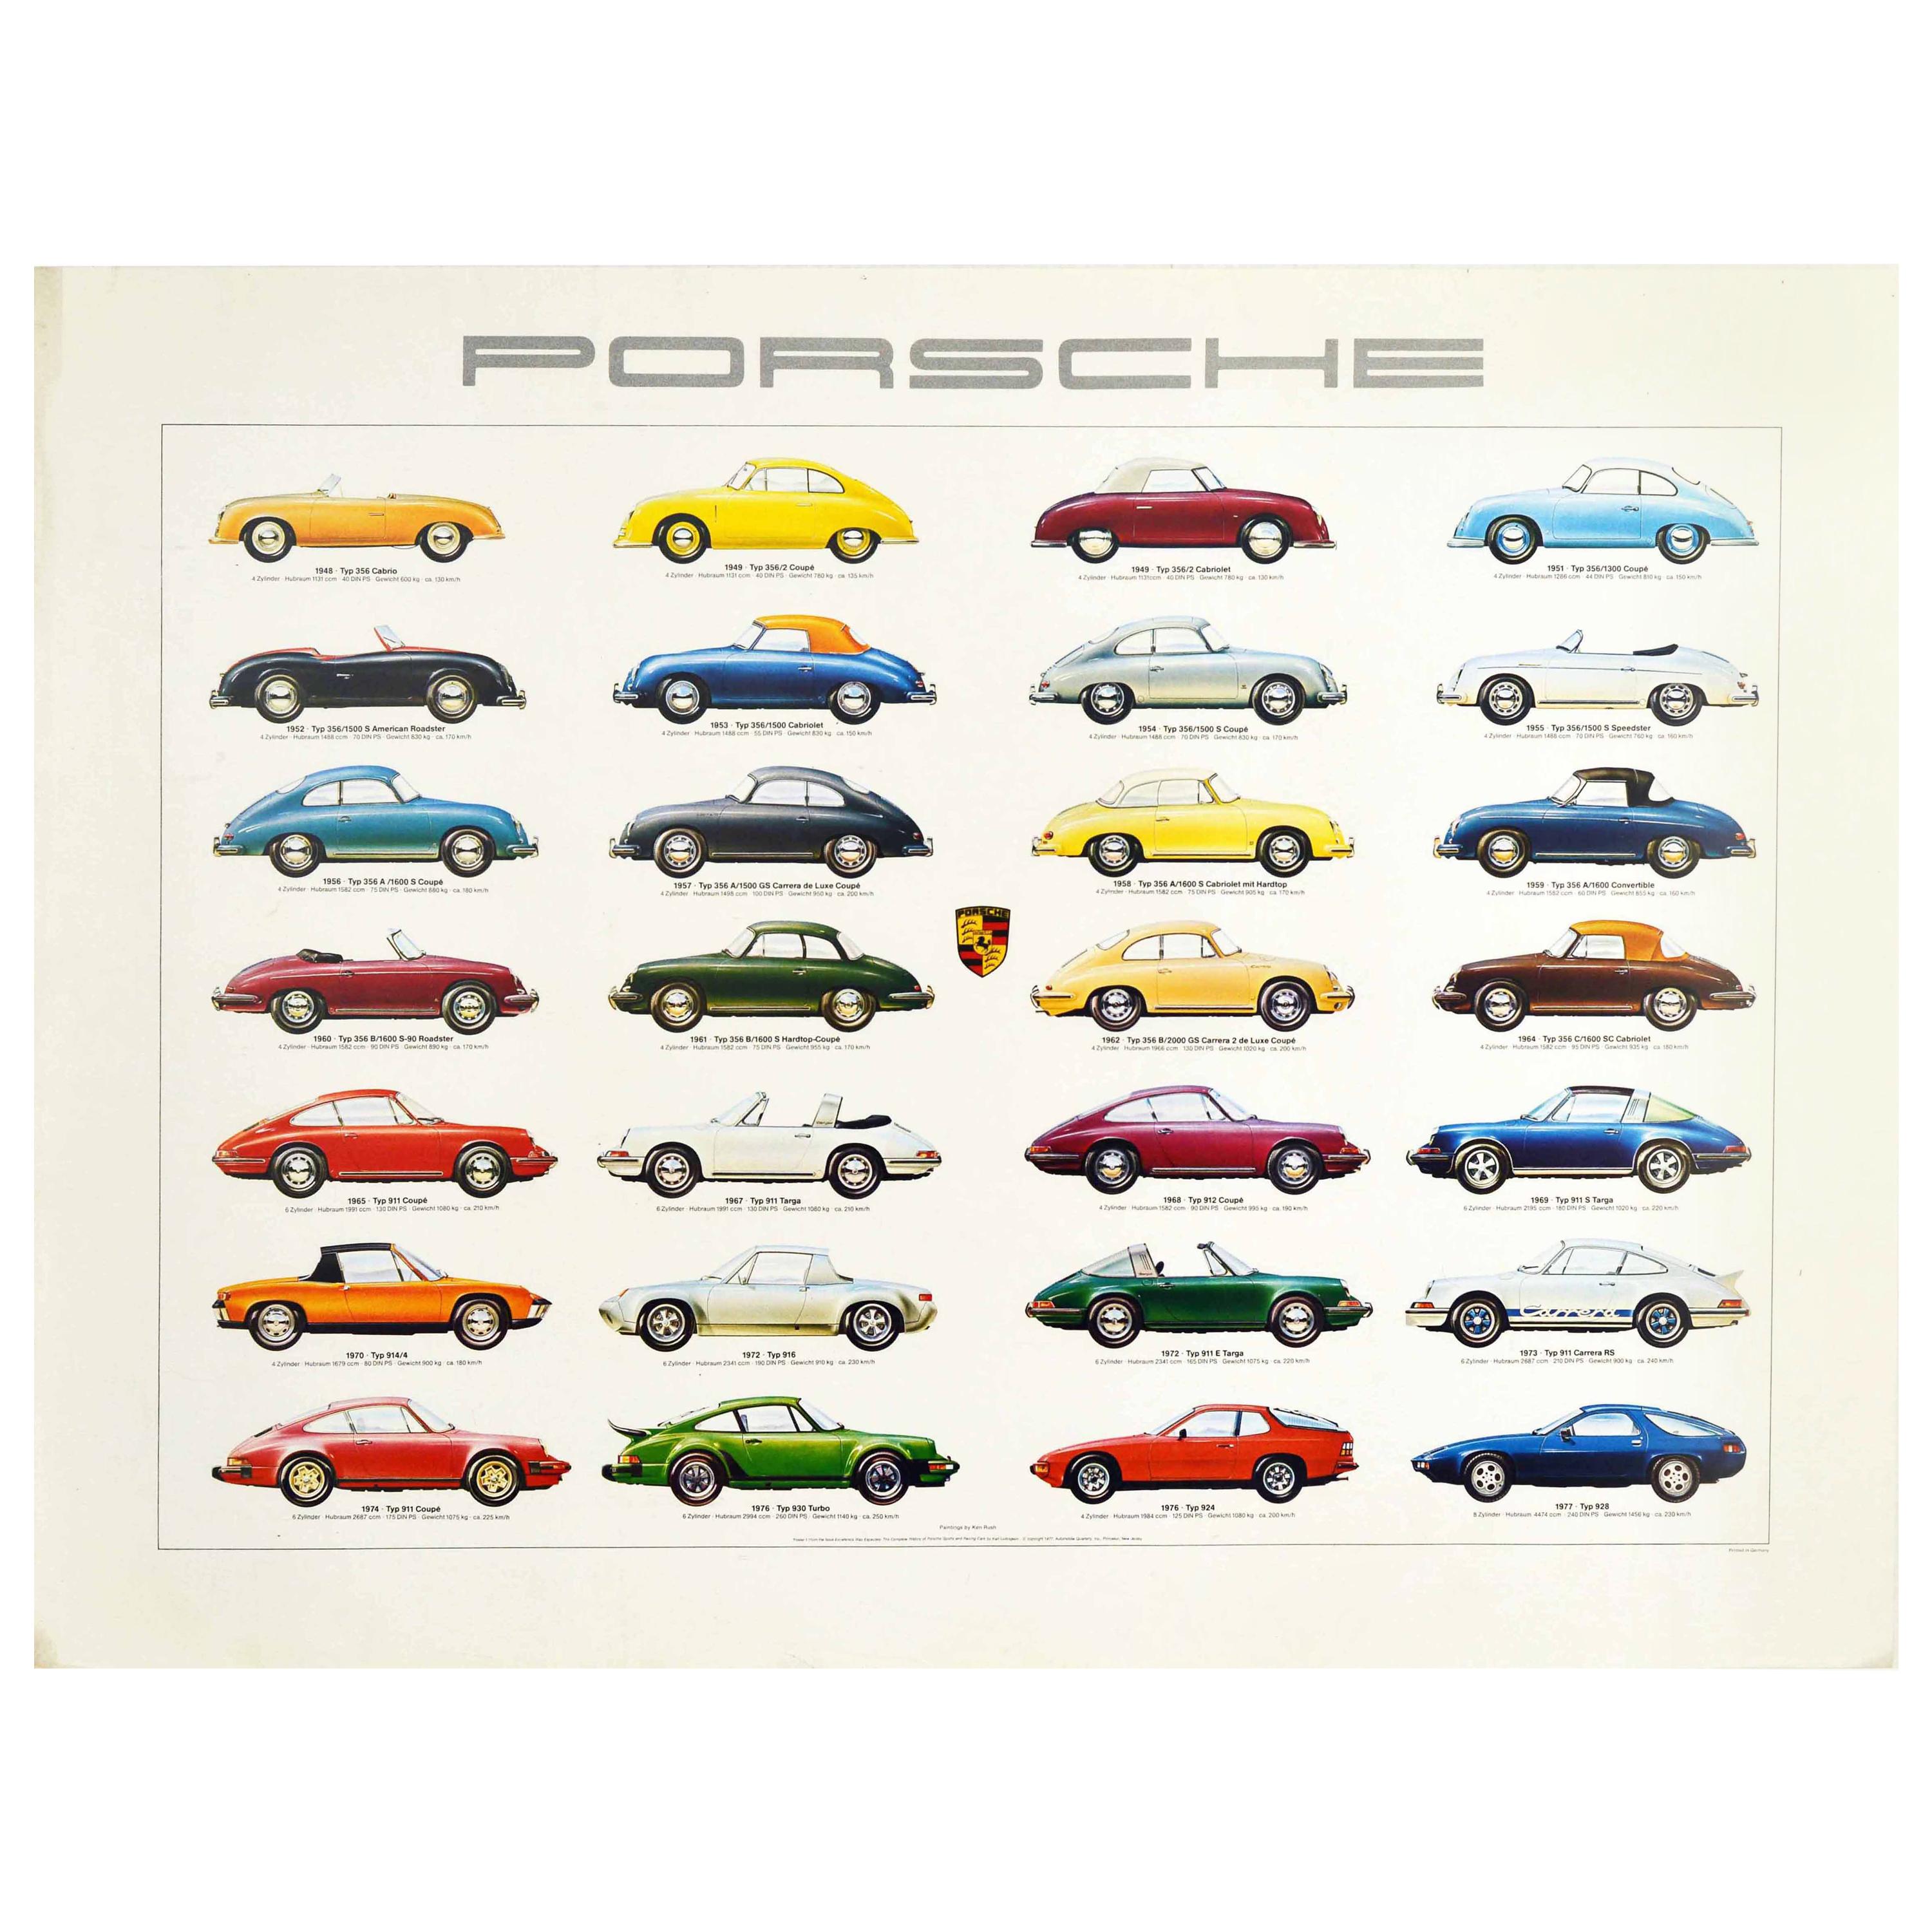 Original Vintage Poster Porsche Production Cars Auto Racing Motor Sports Models